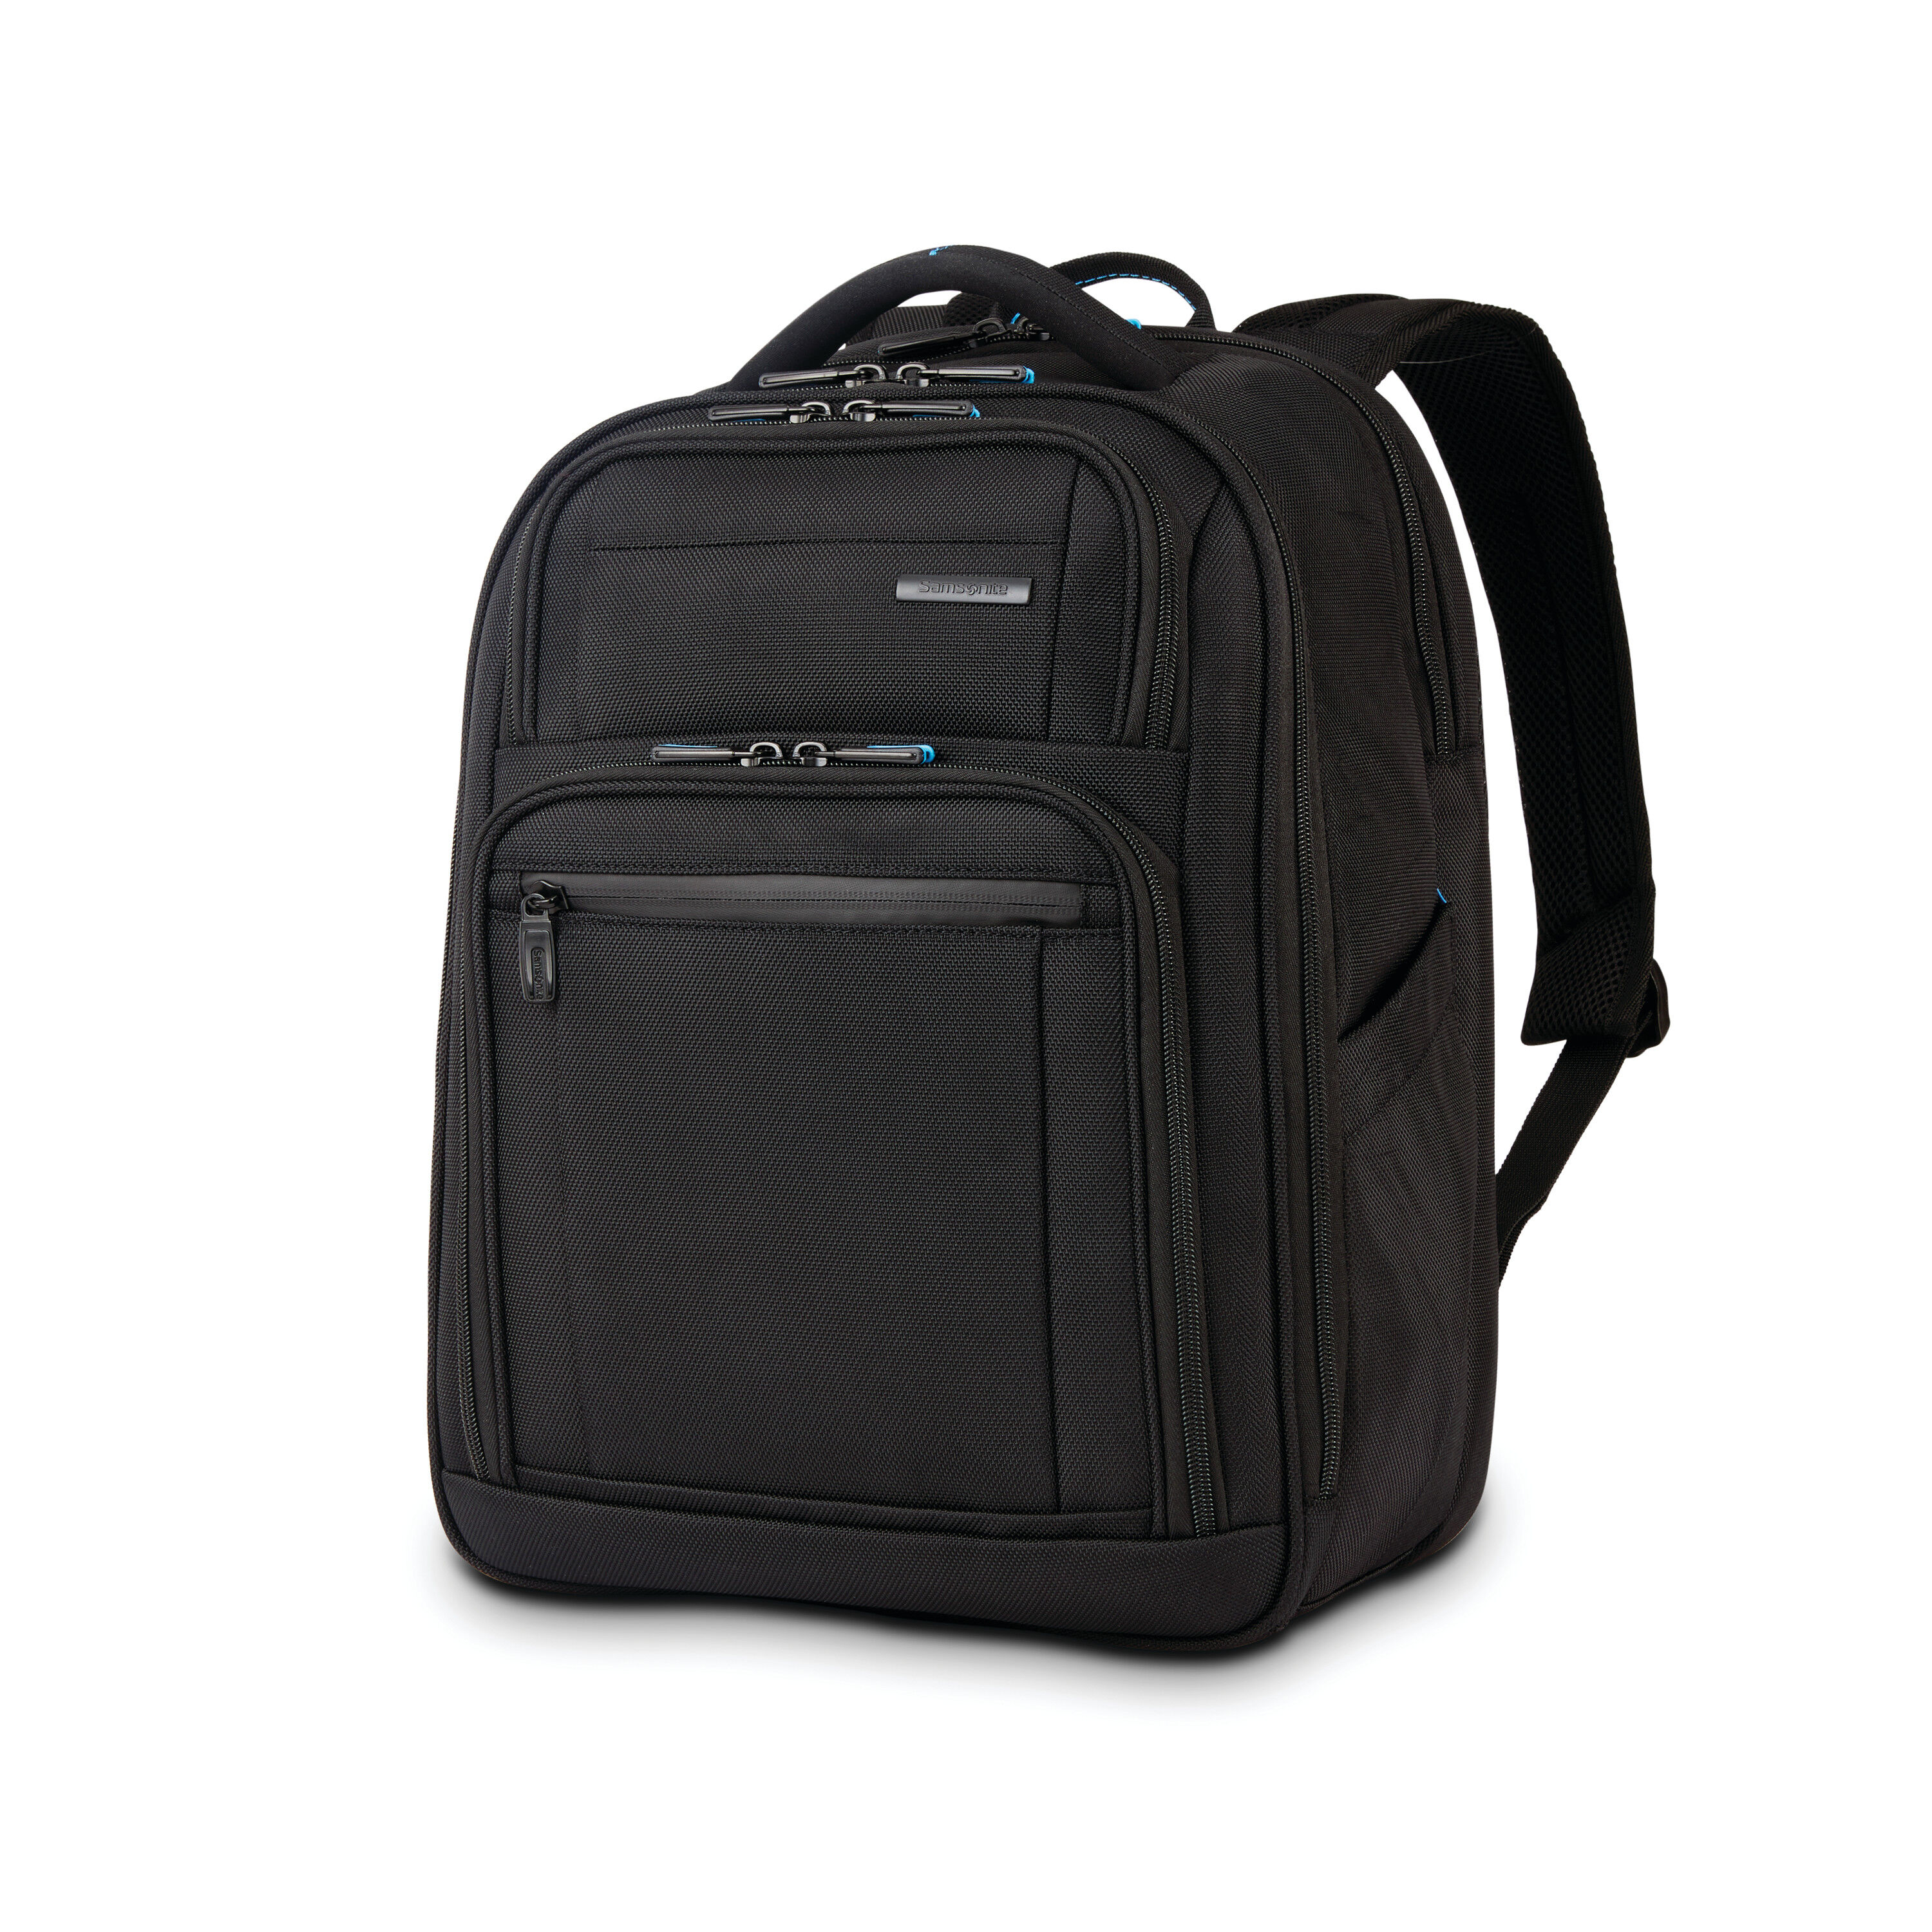 Buy Novex Laptop Backpack for USD 69.99 | Samsonite US